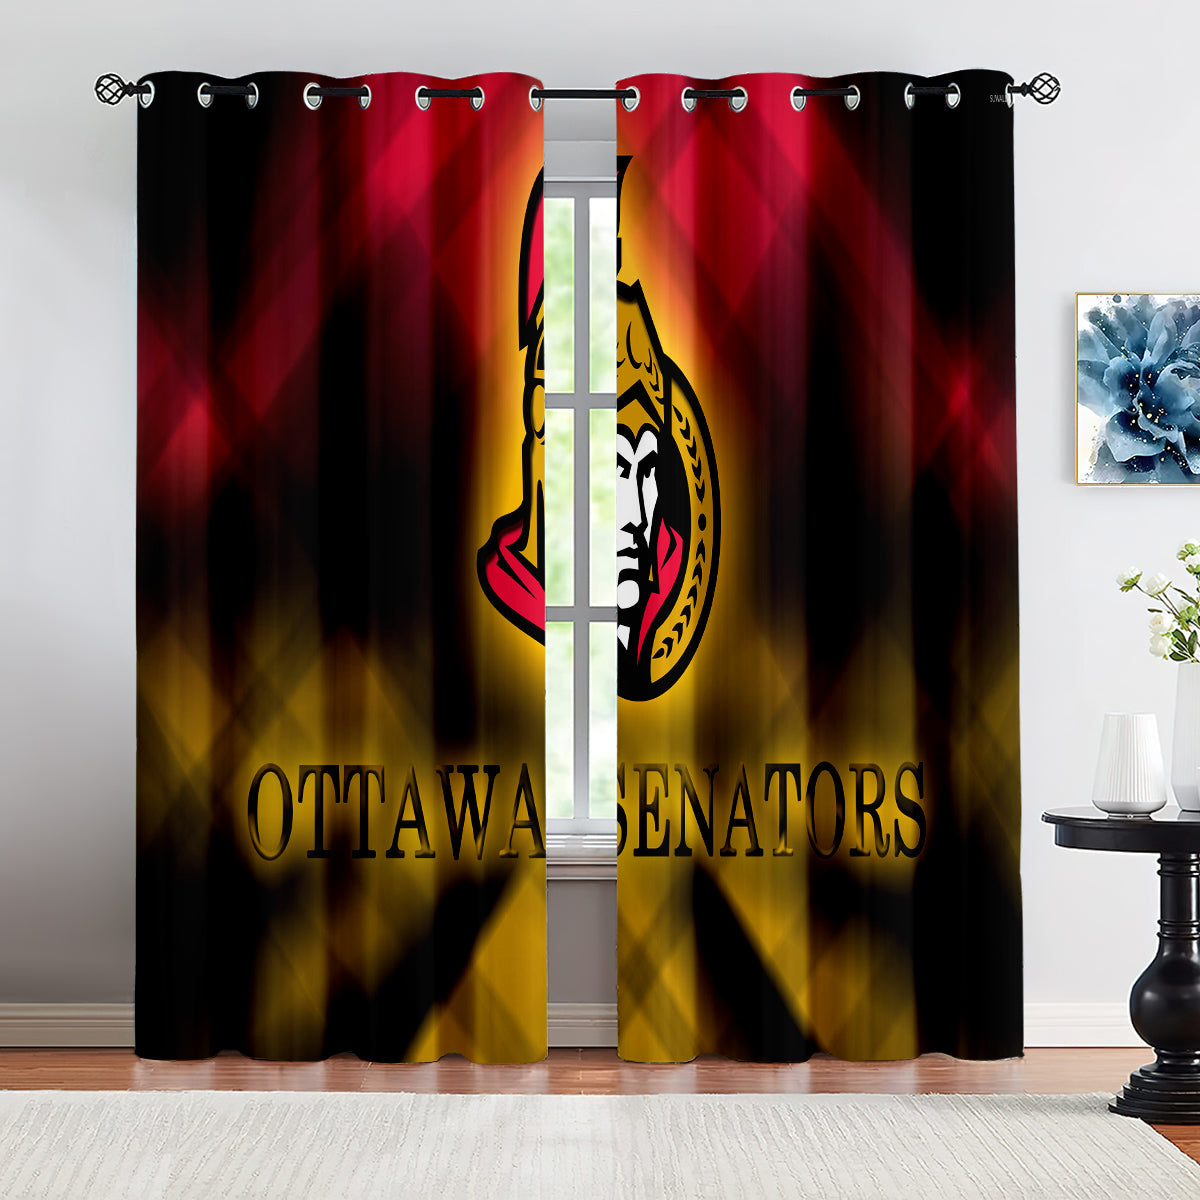 Ottawa Senators Hockey League Blackout Curtains Drapes For Window Treatment Set